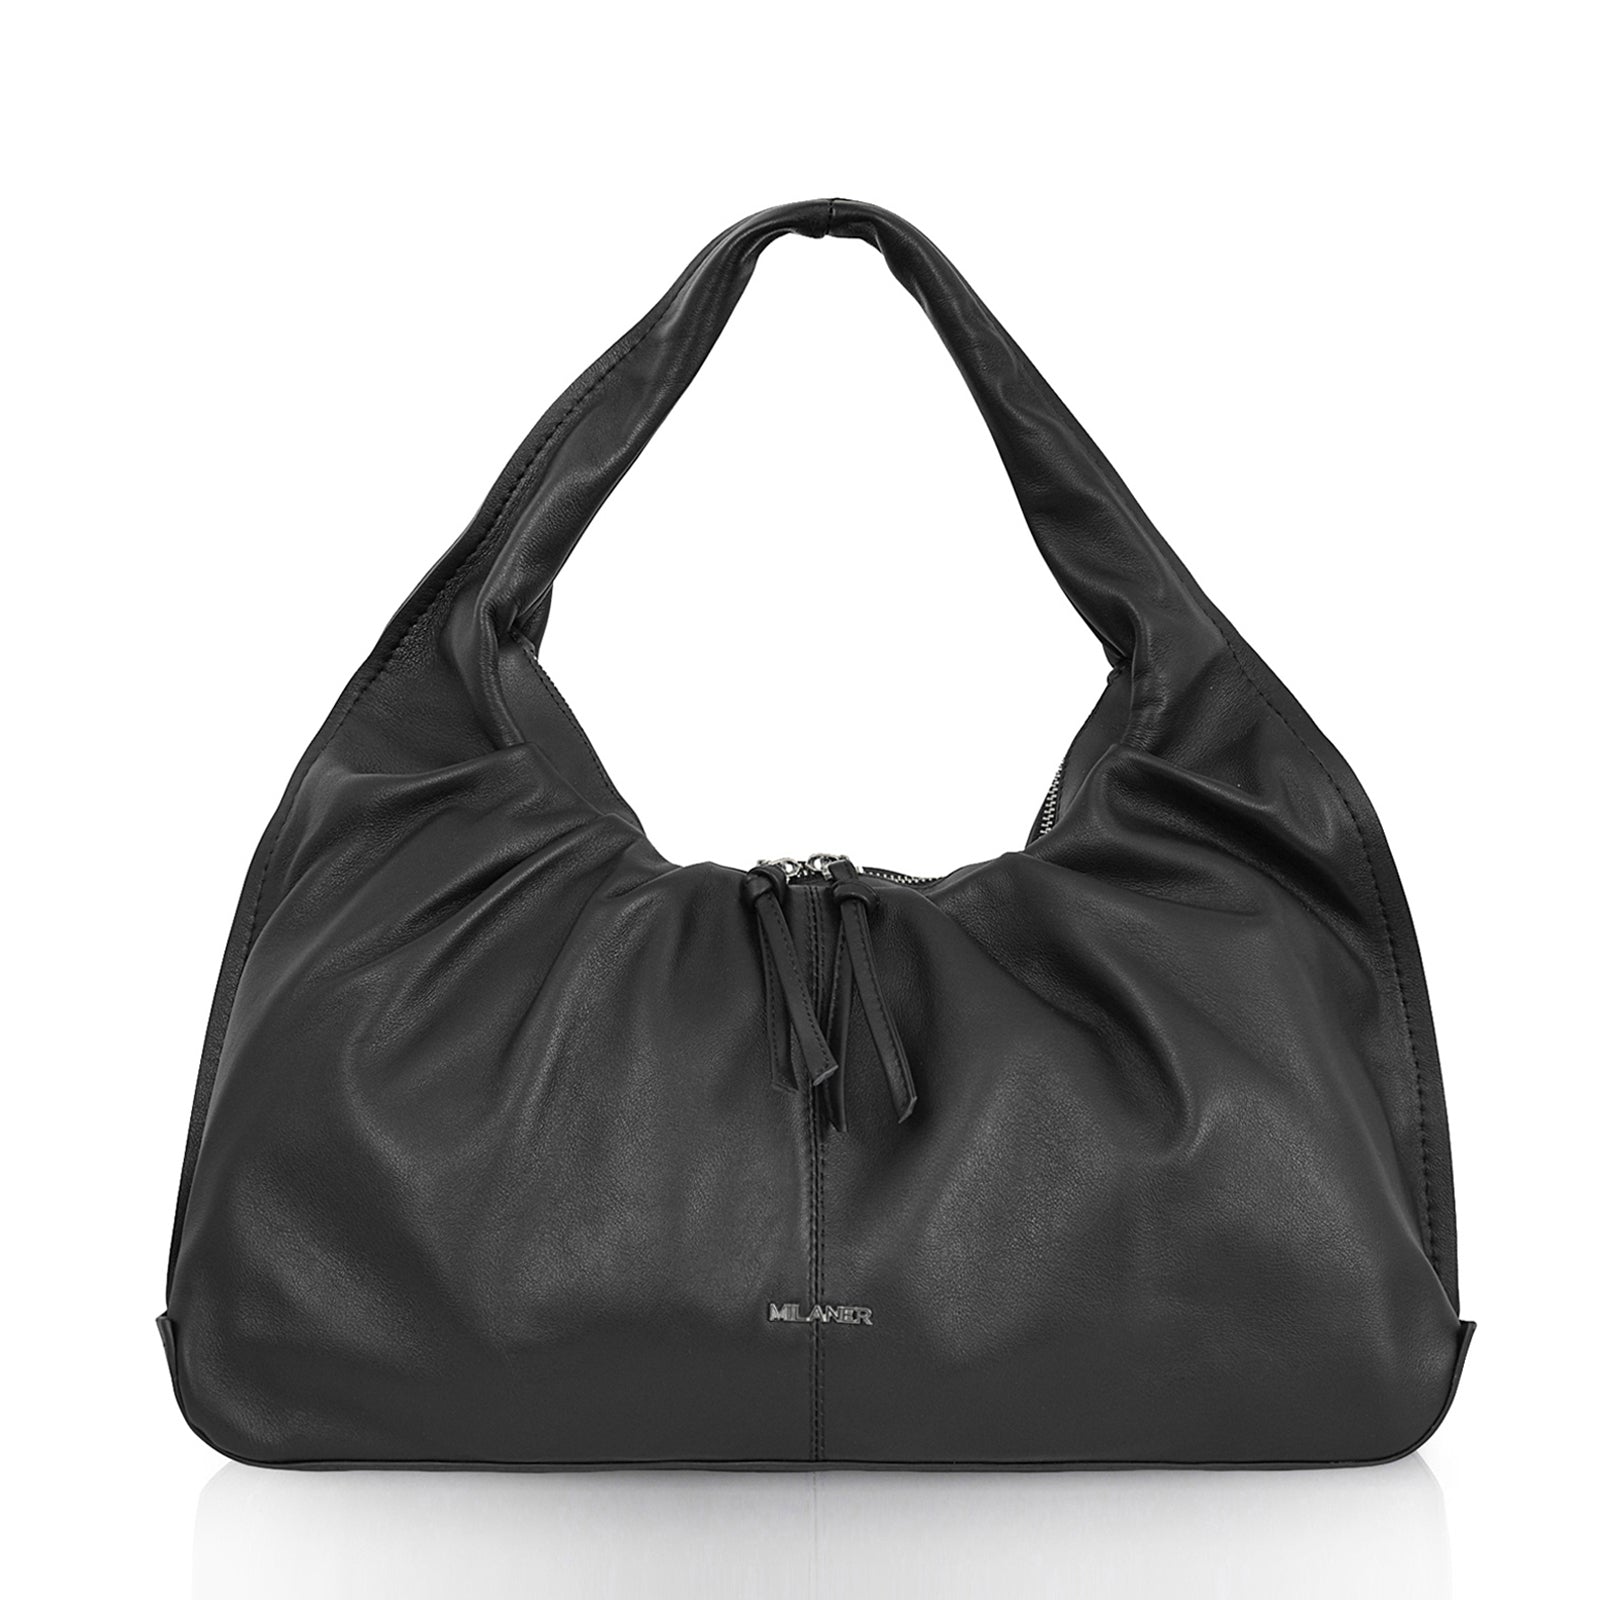 The Mela Wicker Bucket Bag - MILANER